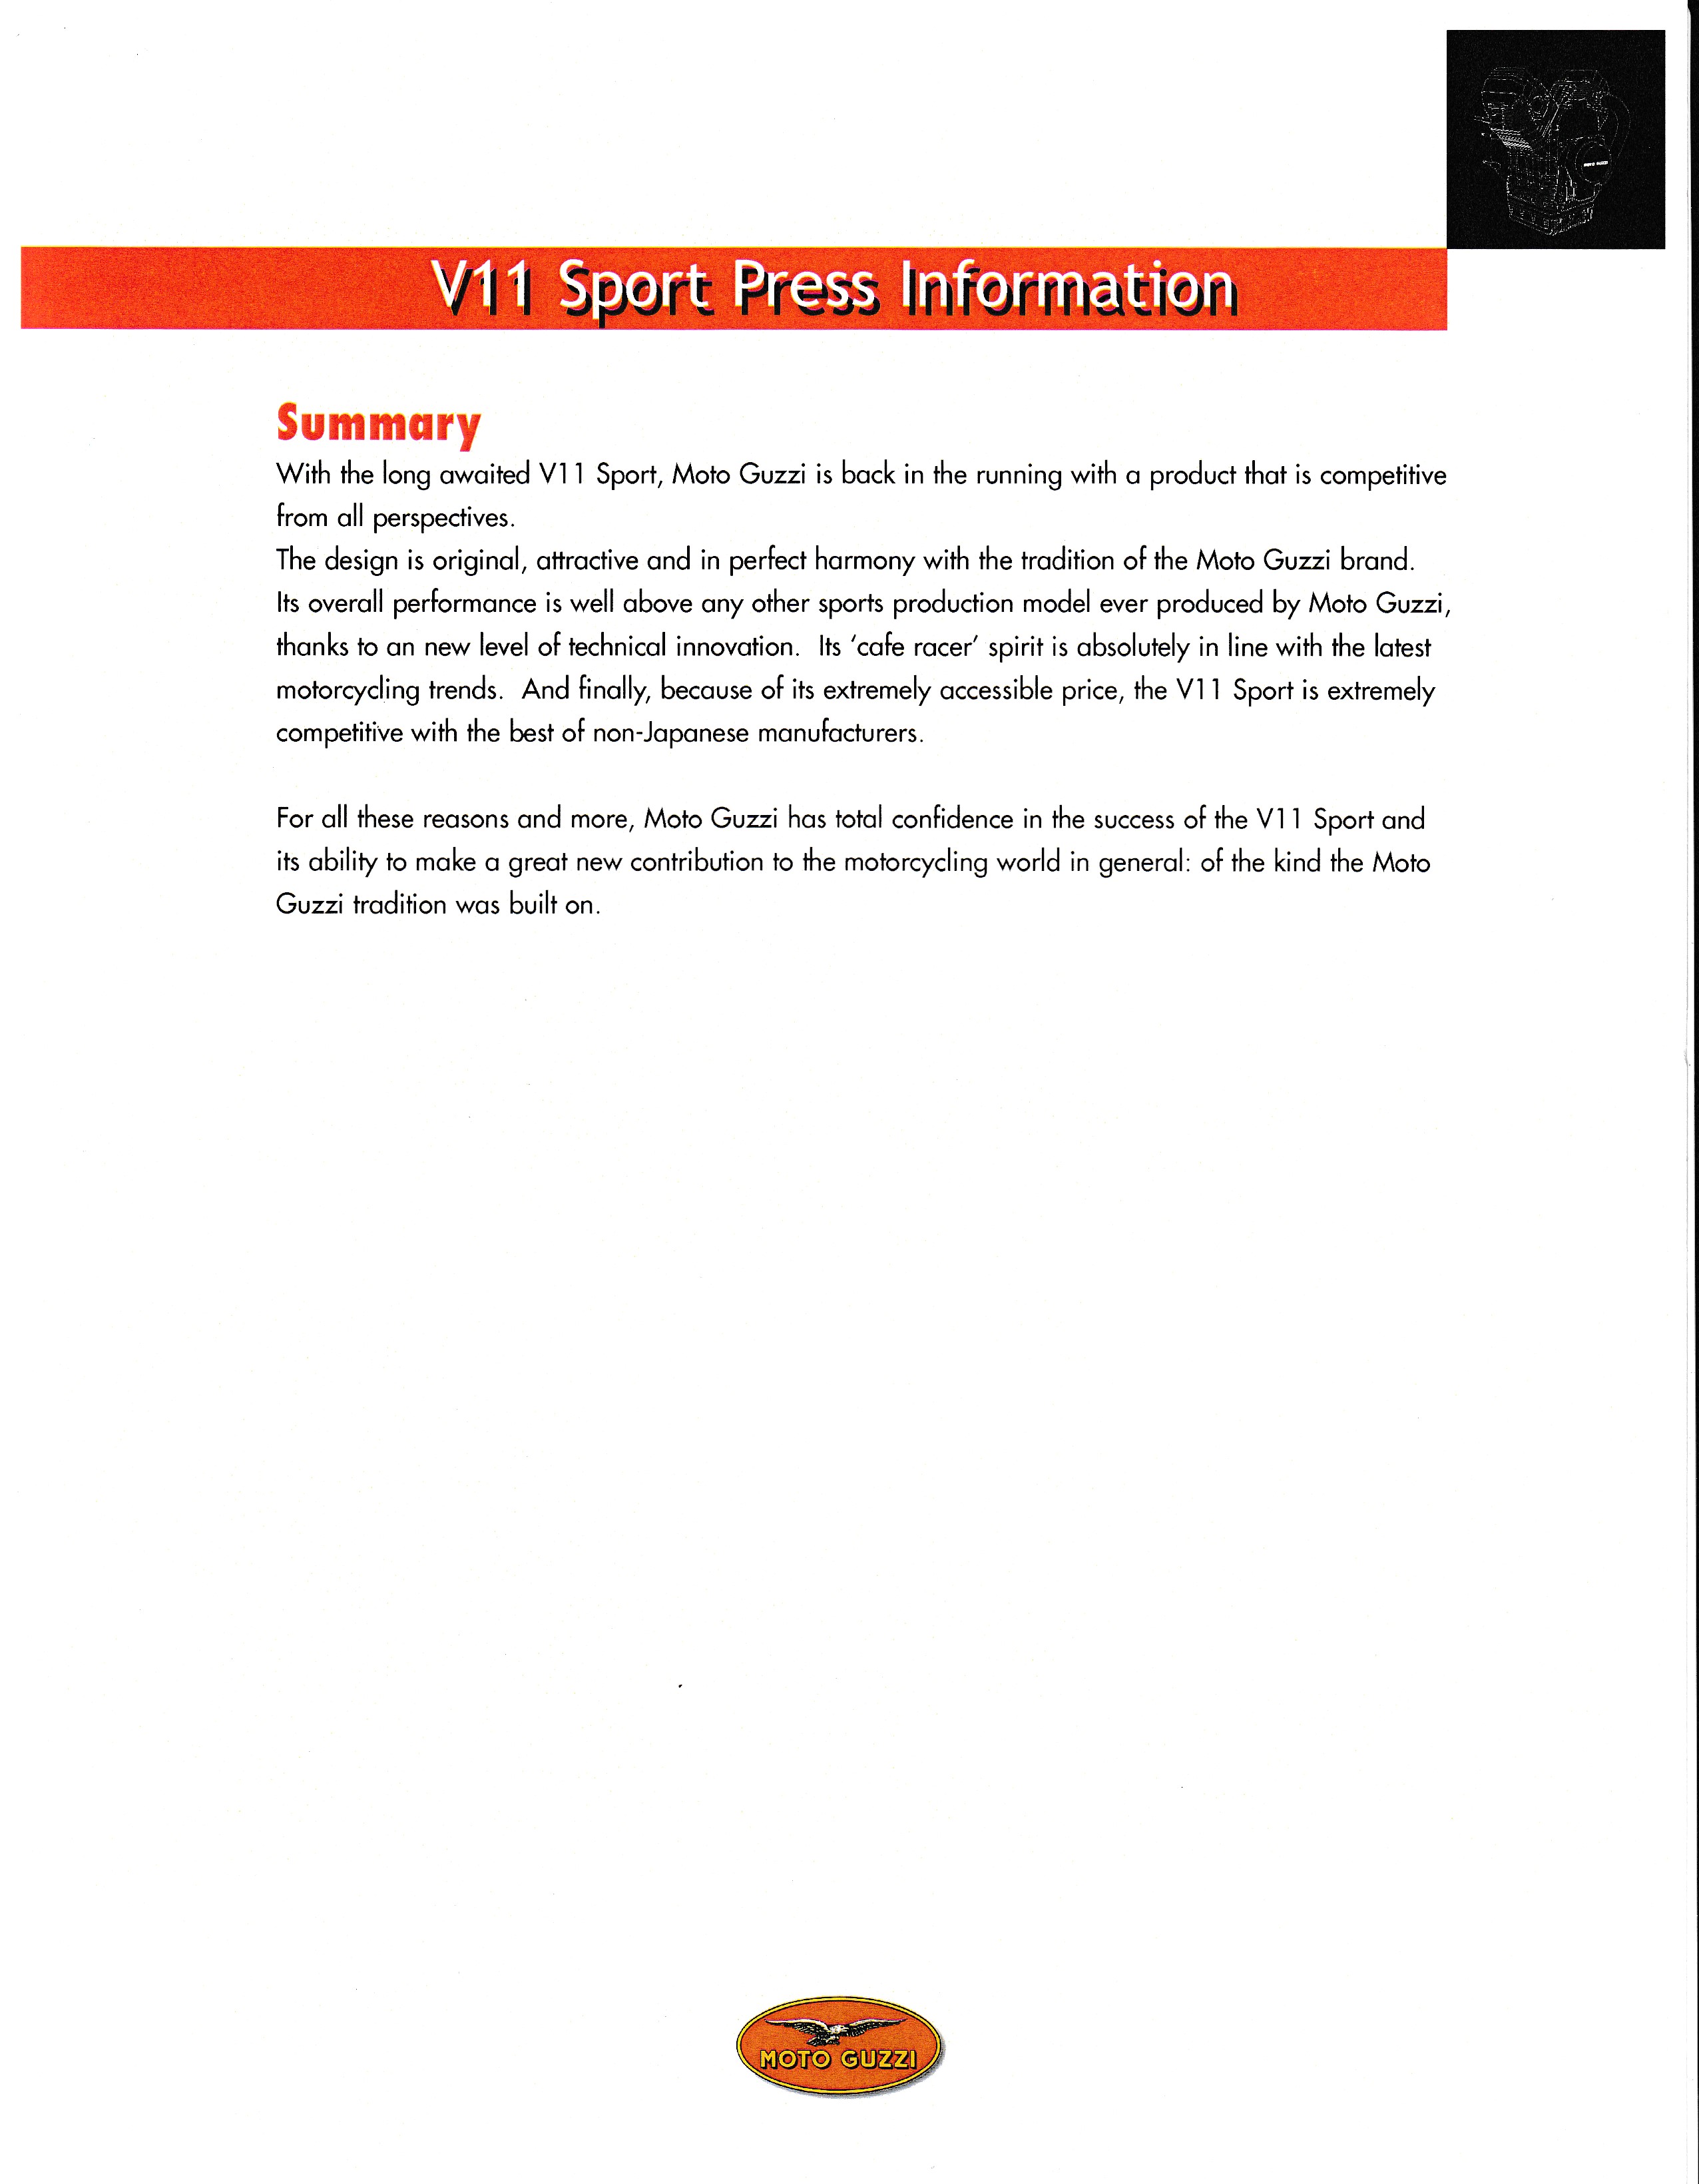 Press release - Moto Guzzi V11 Sport press kit and test bike scheduling (2000 June 07)